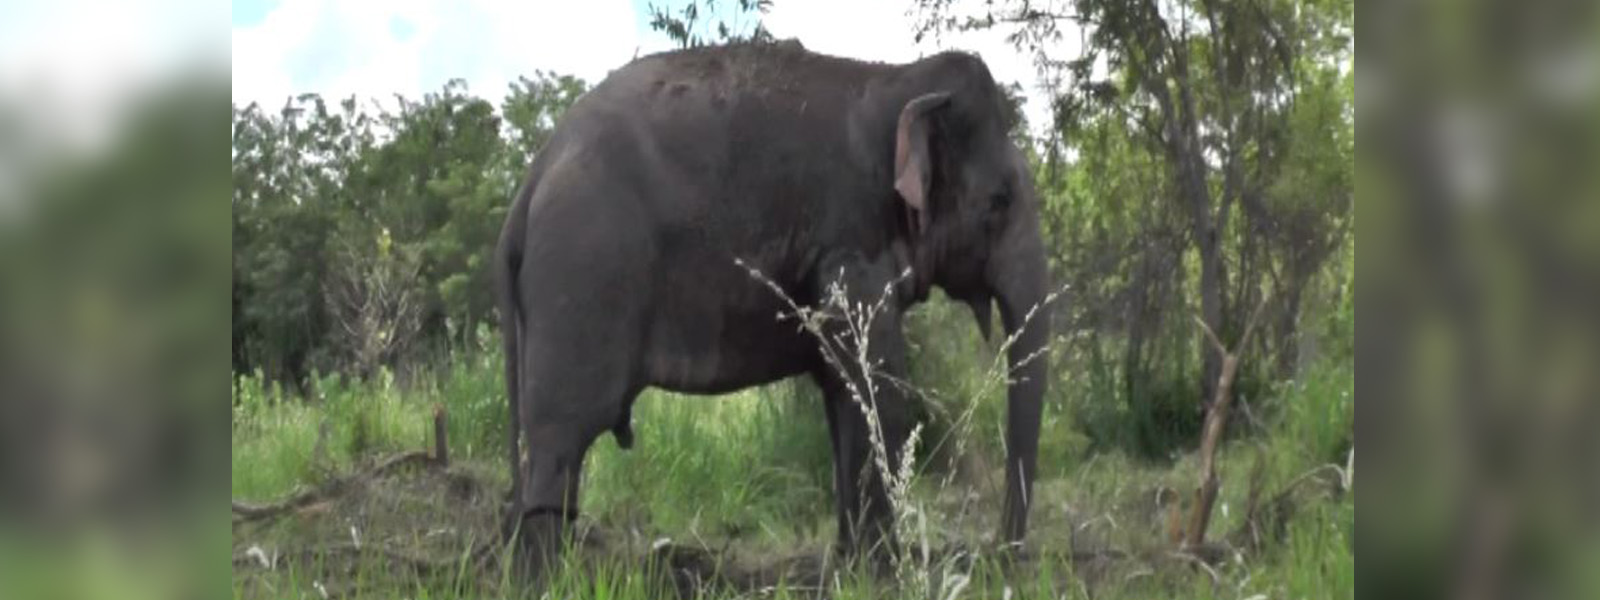 Wildlife officers probe shooting death of elephant